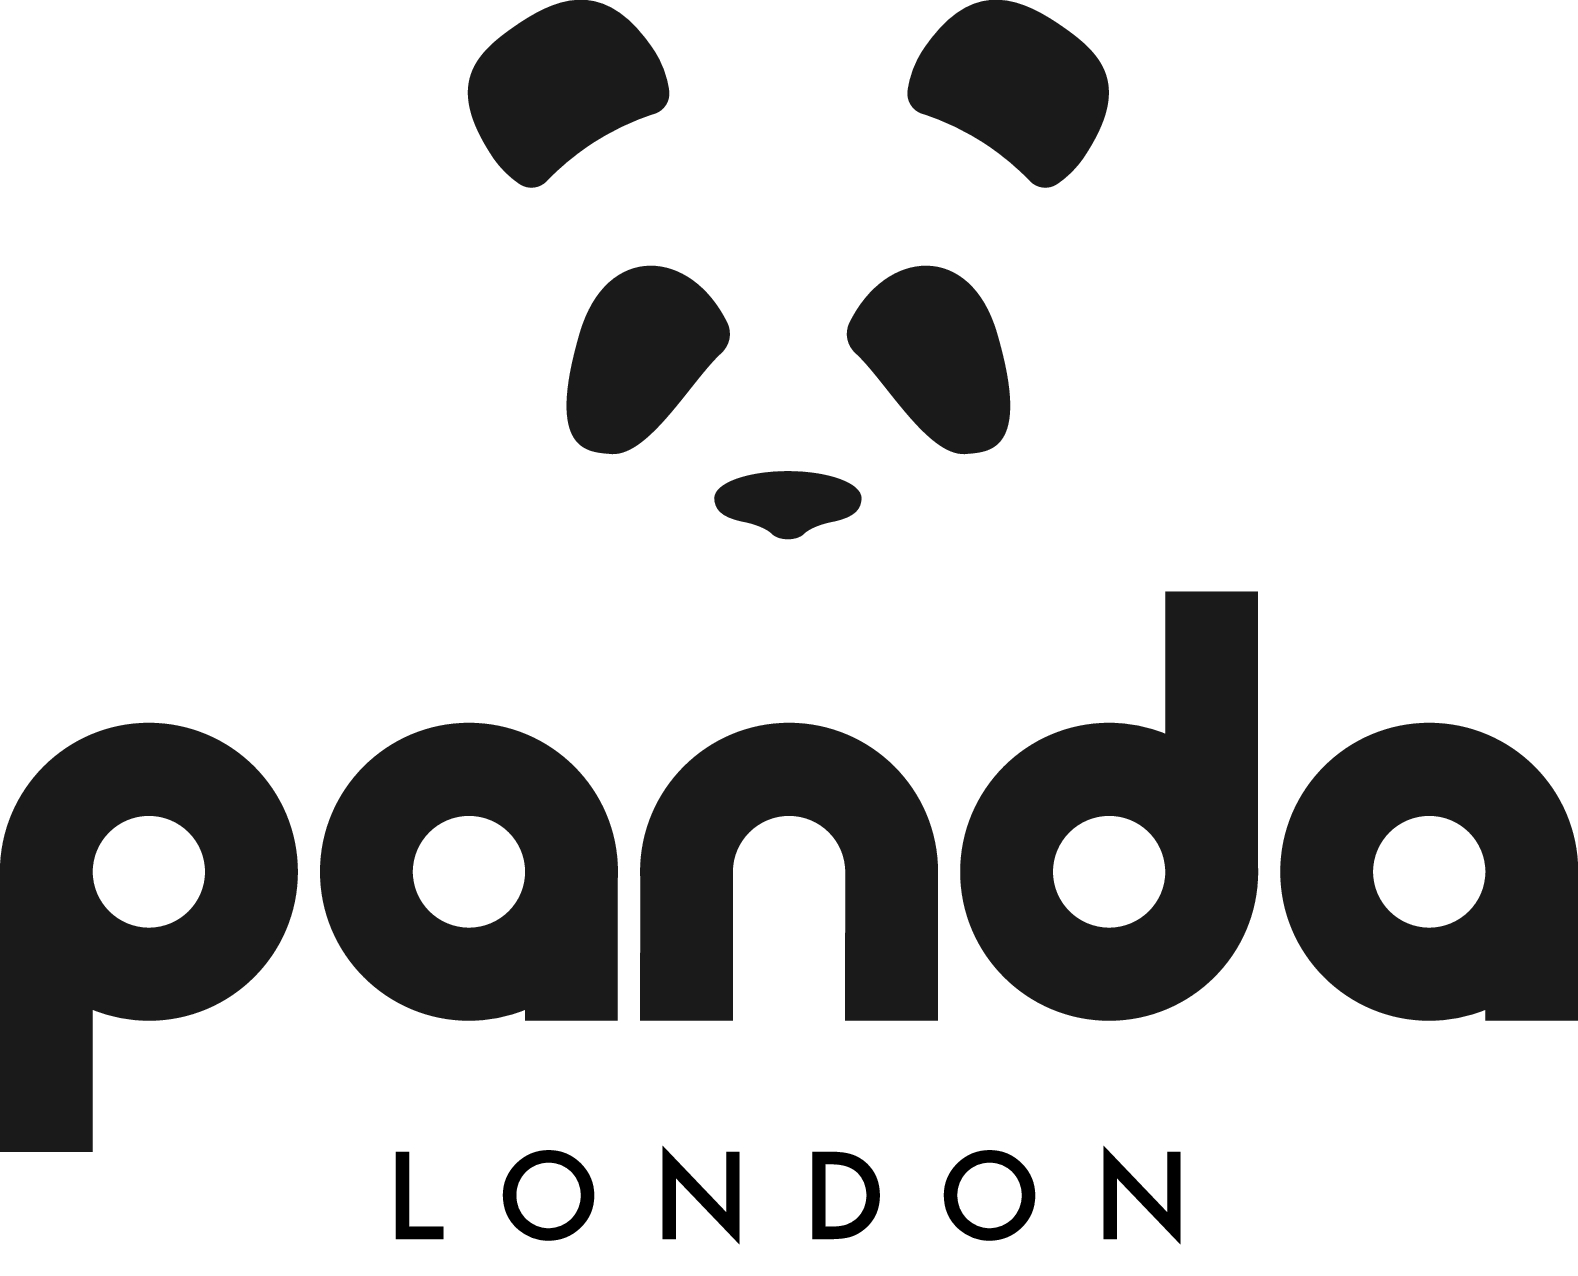 Panda London kupony 